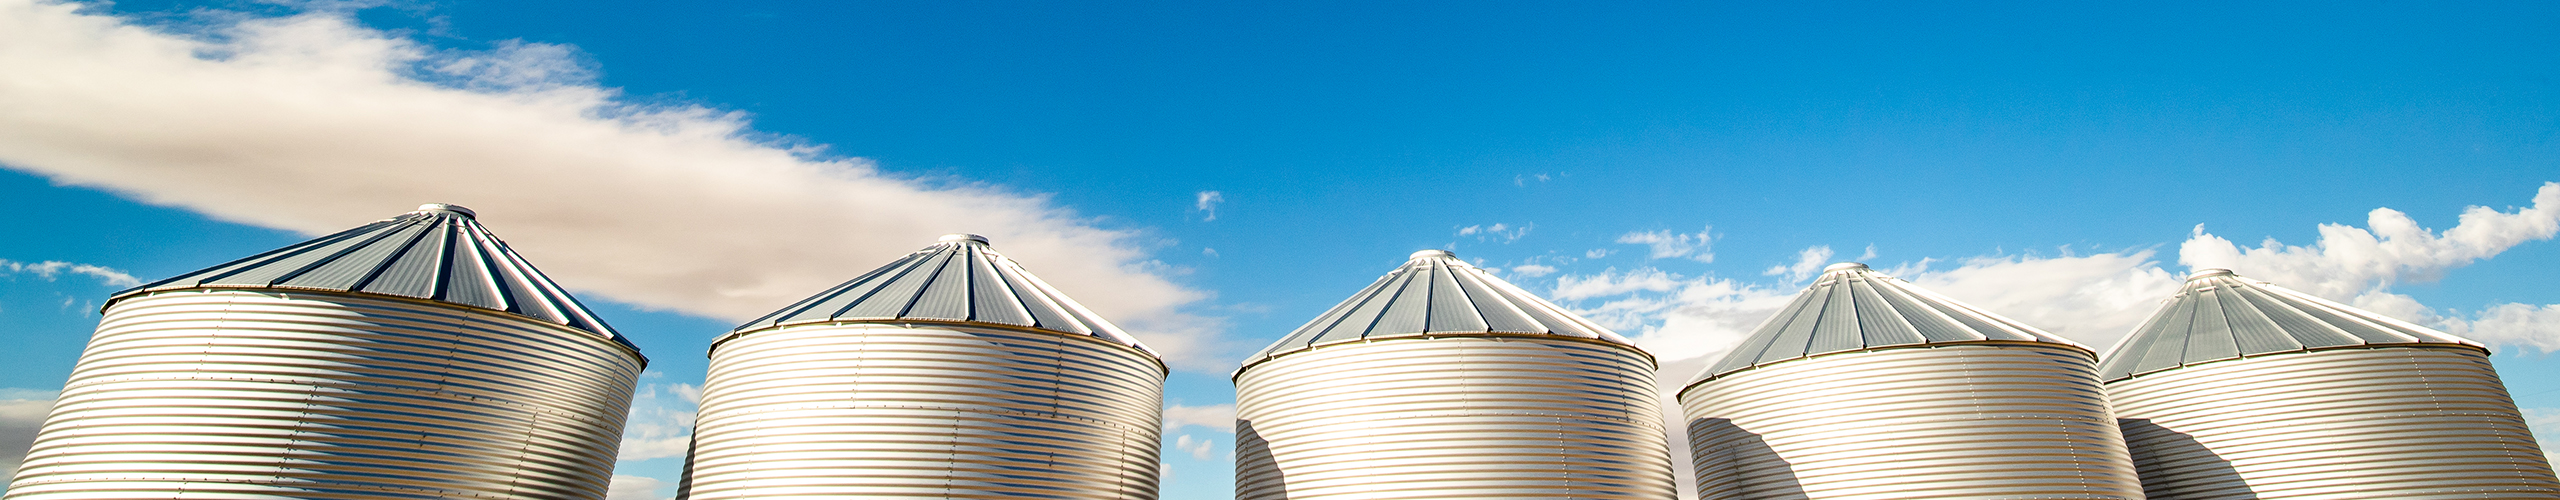 top of grain bins against a blue sky